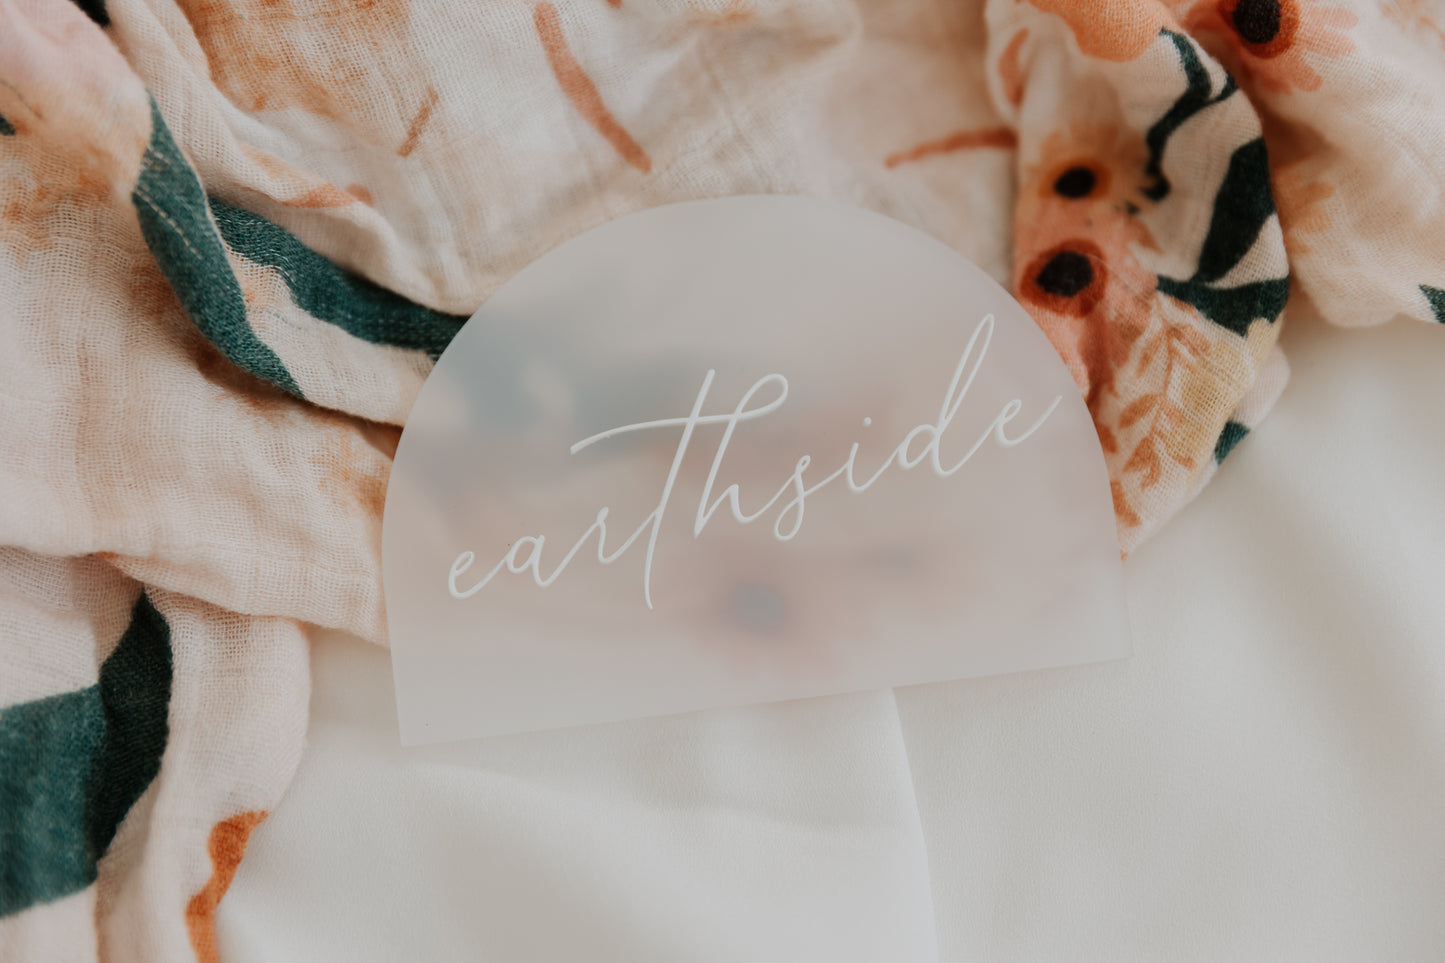 Earthside Baby Announcement Plaque